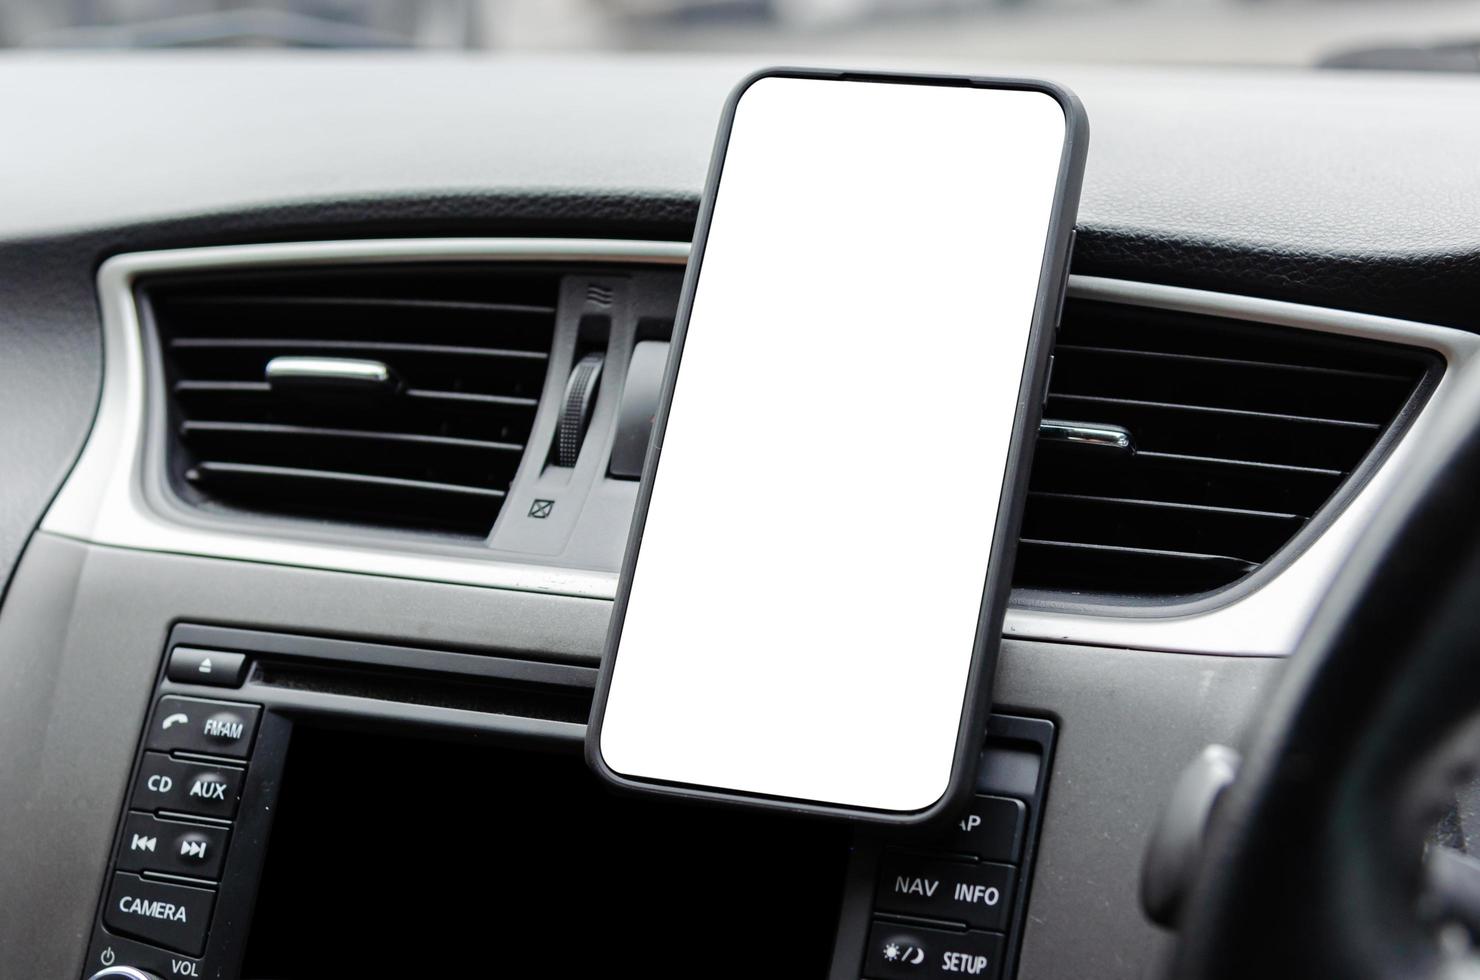 telefoon op auto dashboard mock-up foto